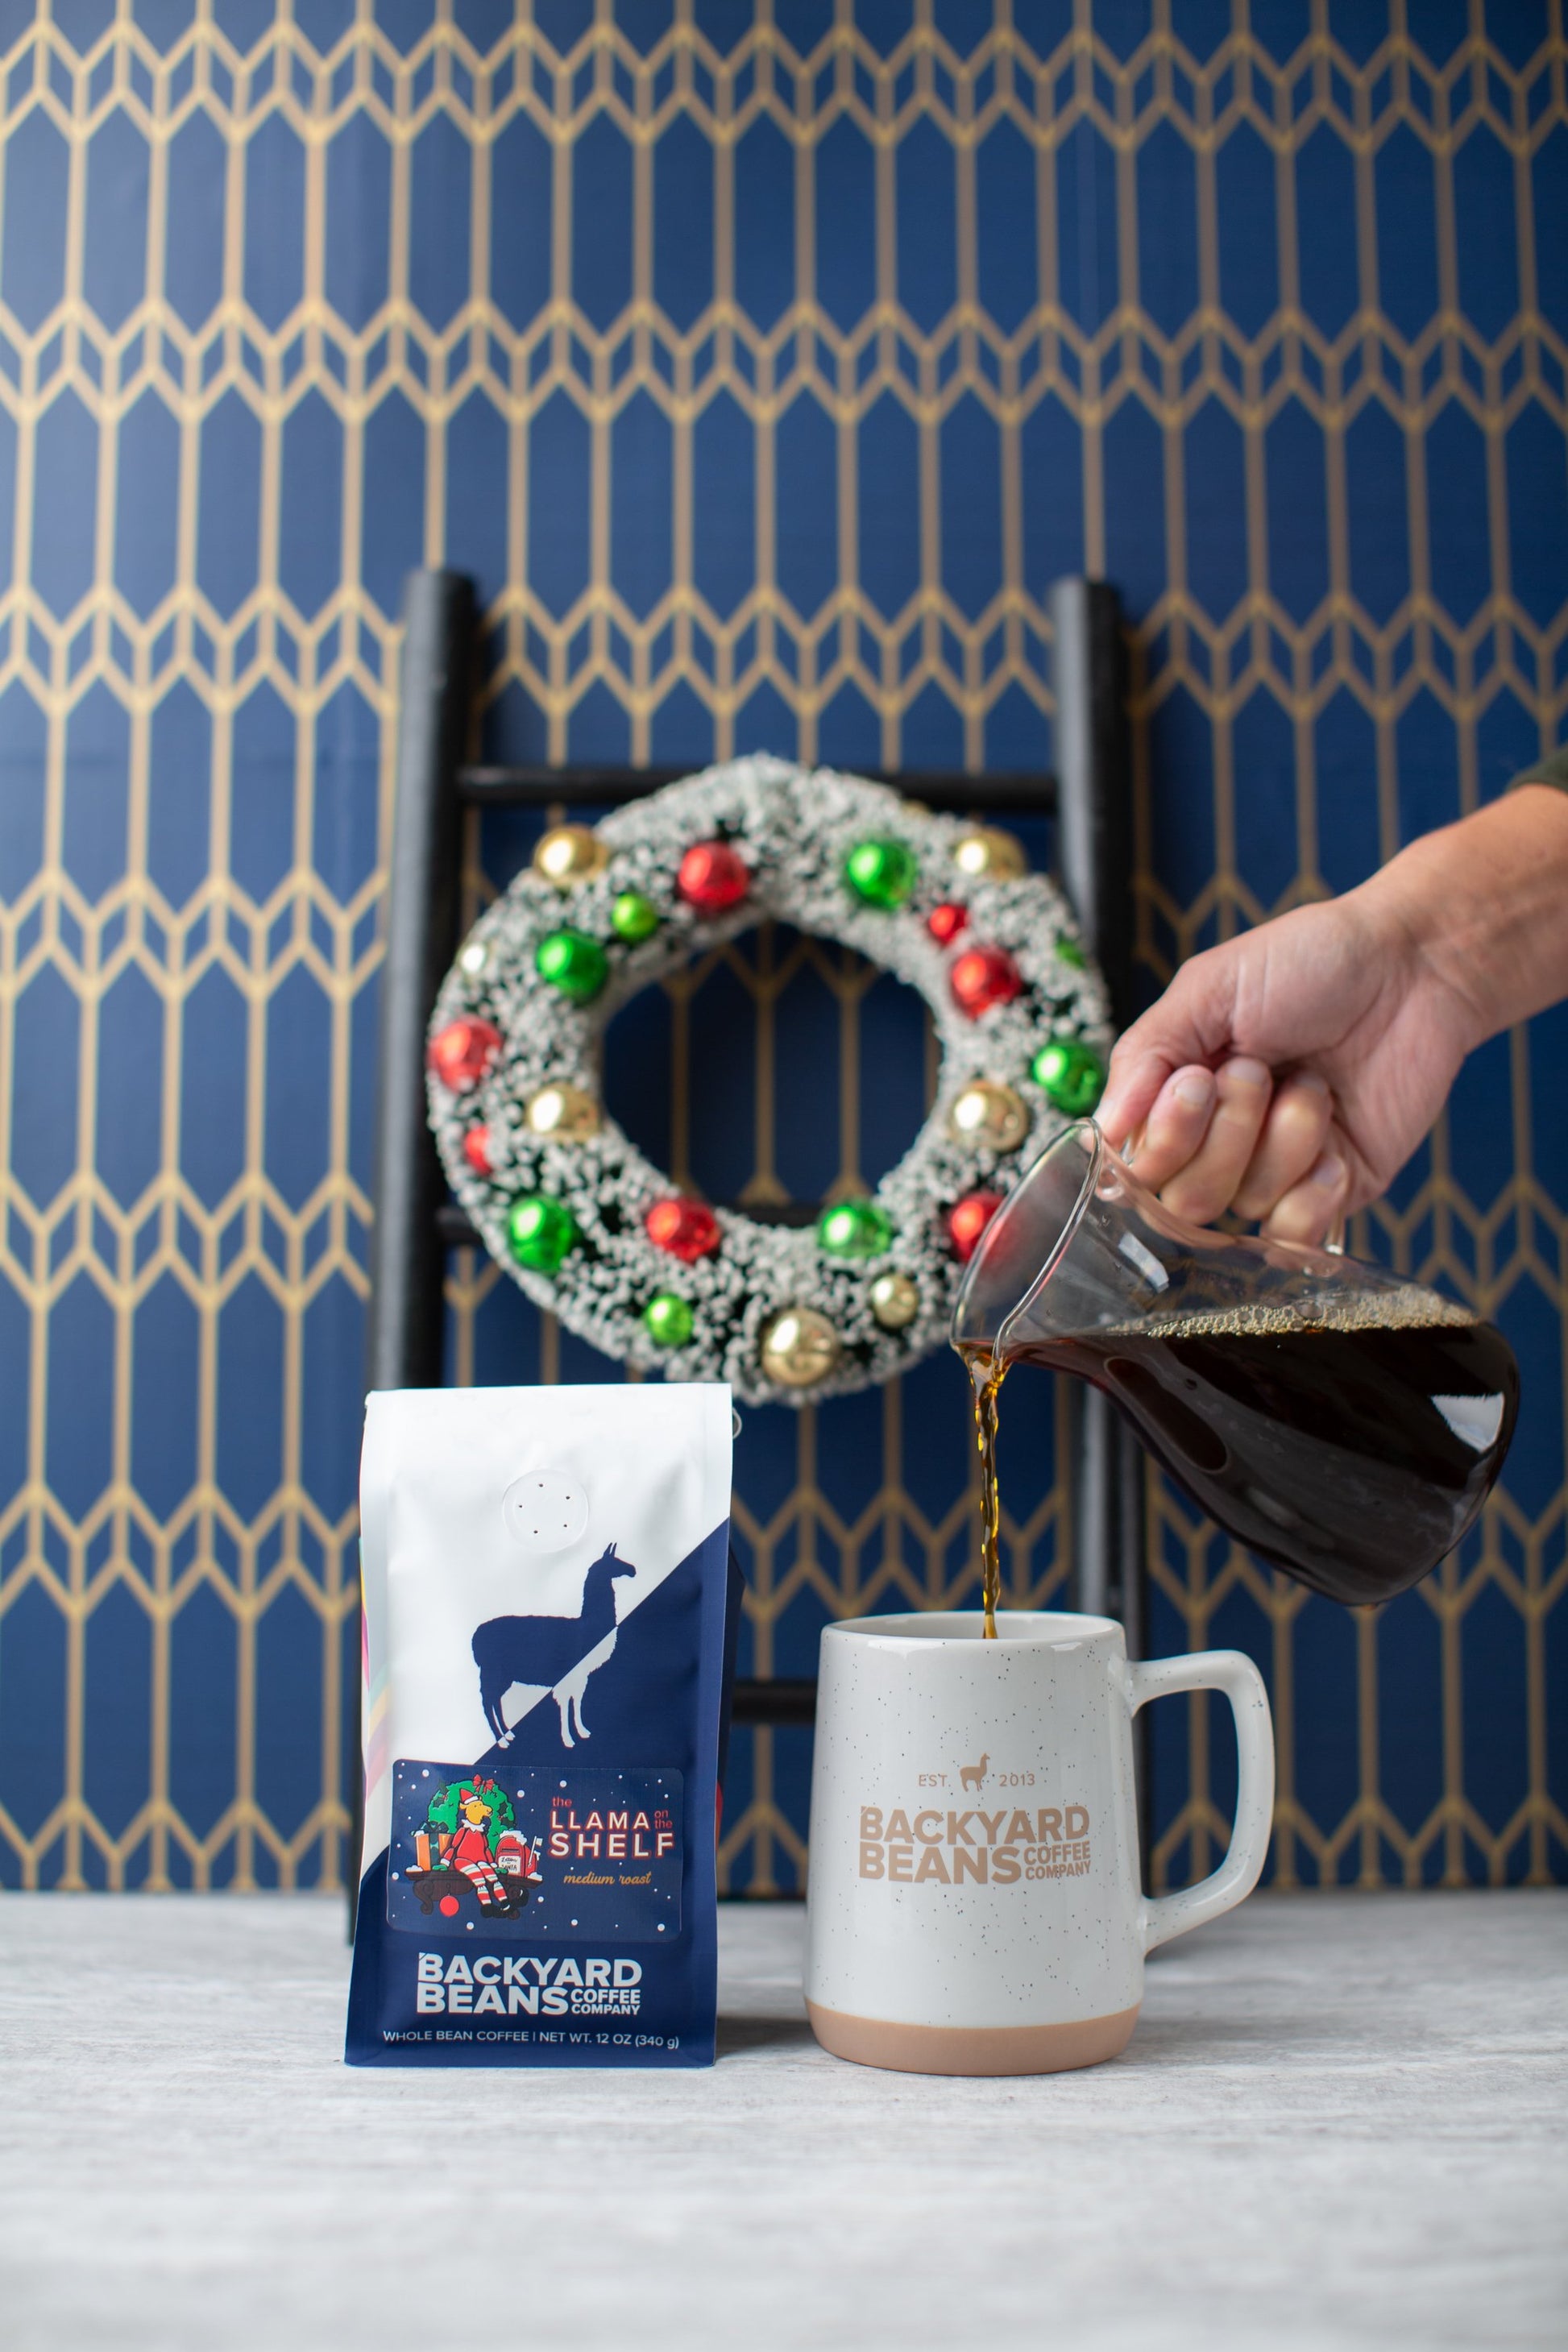 Image of hand pouring coffee into mug with a Llama on the Shelf coffee bag.